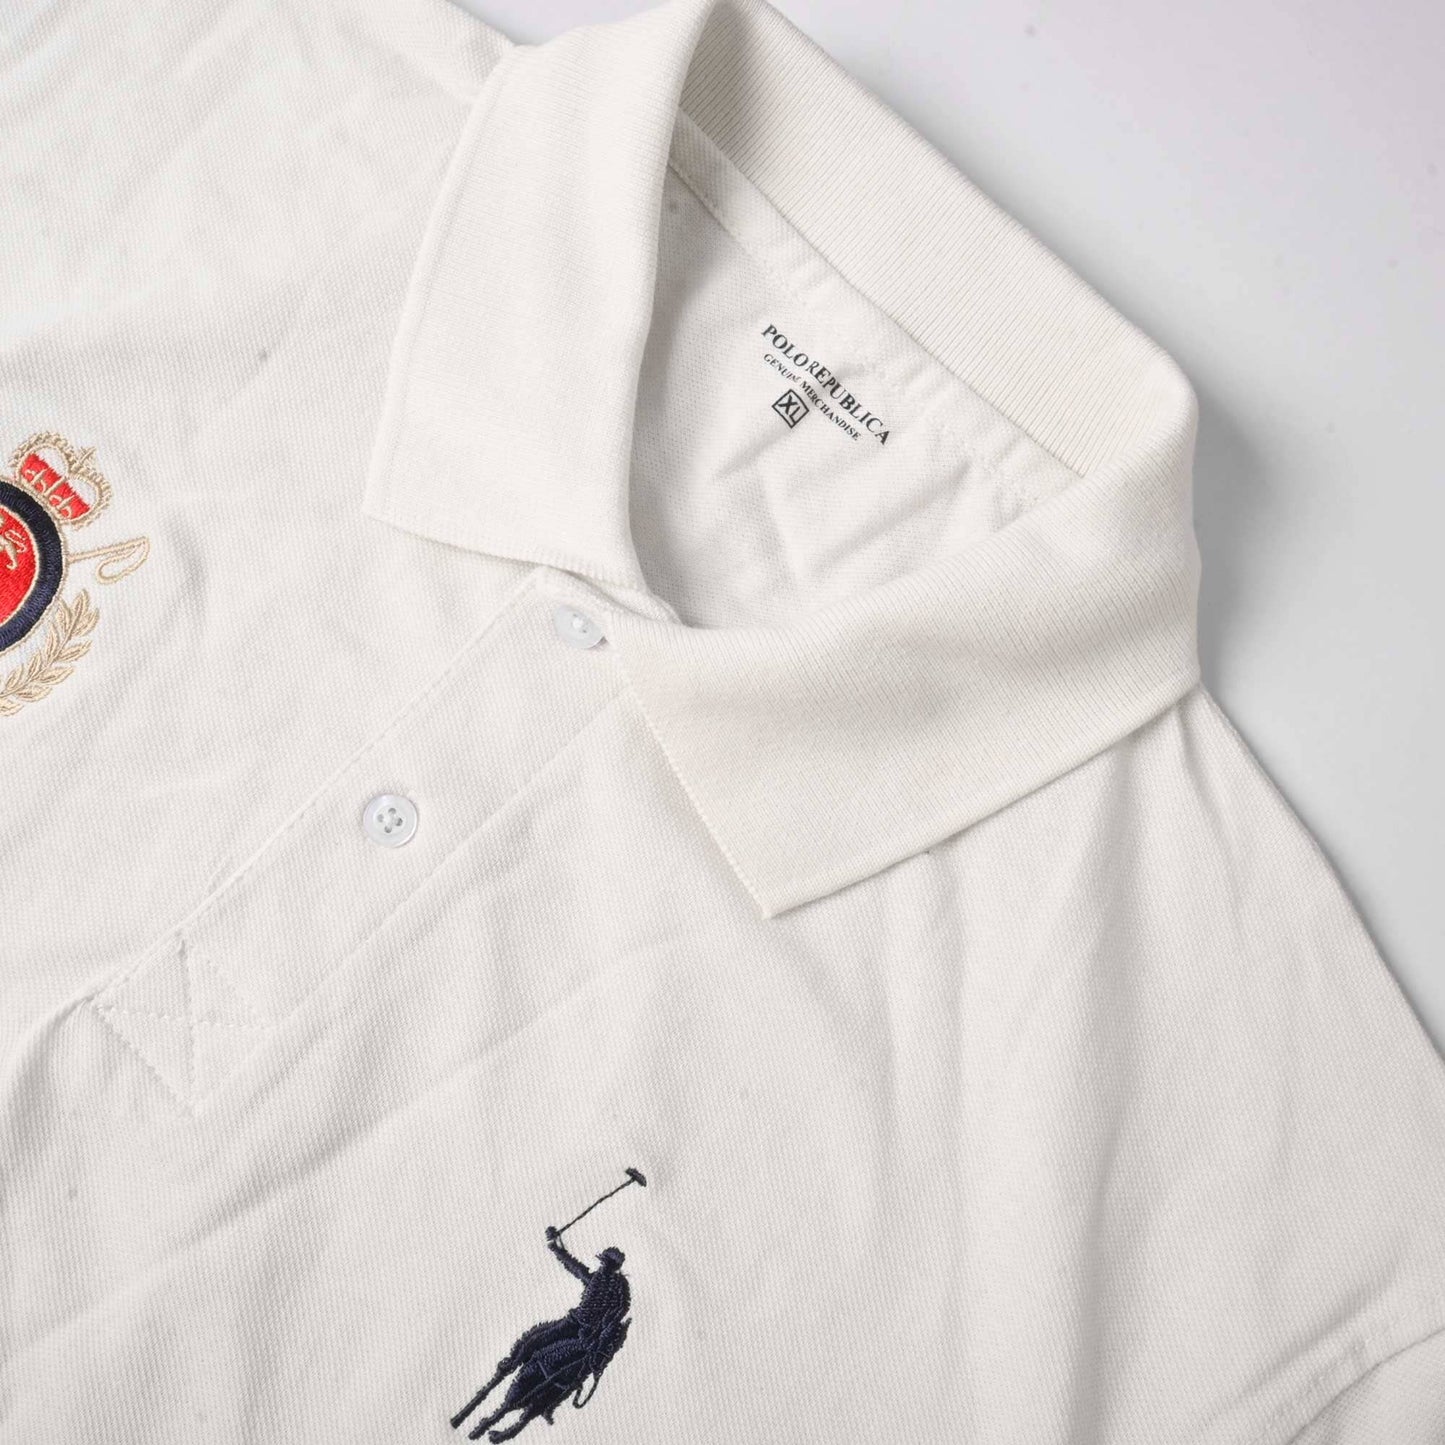 Polo Republica Men's Signature Pony & Crest 5 Embroidered Polo Shirt Men's Polo Shirt Polo Republica 